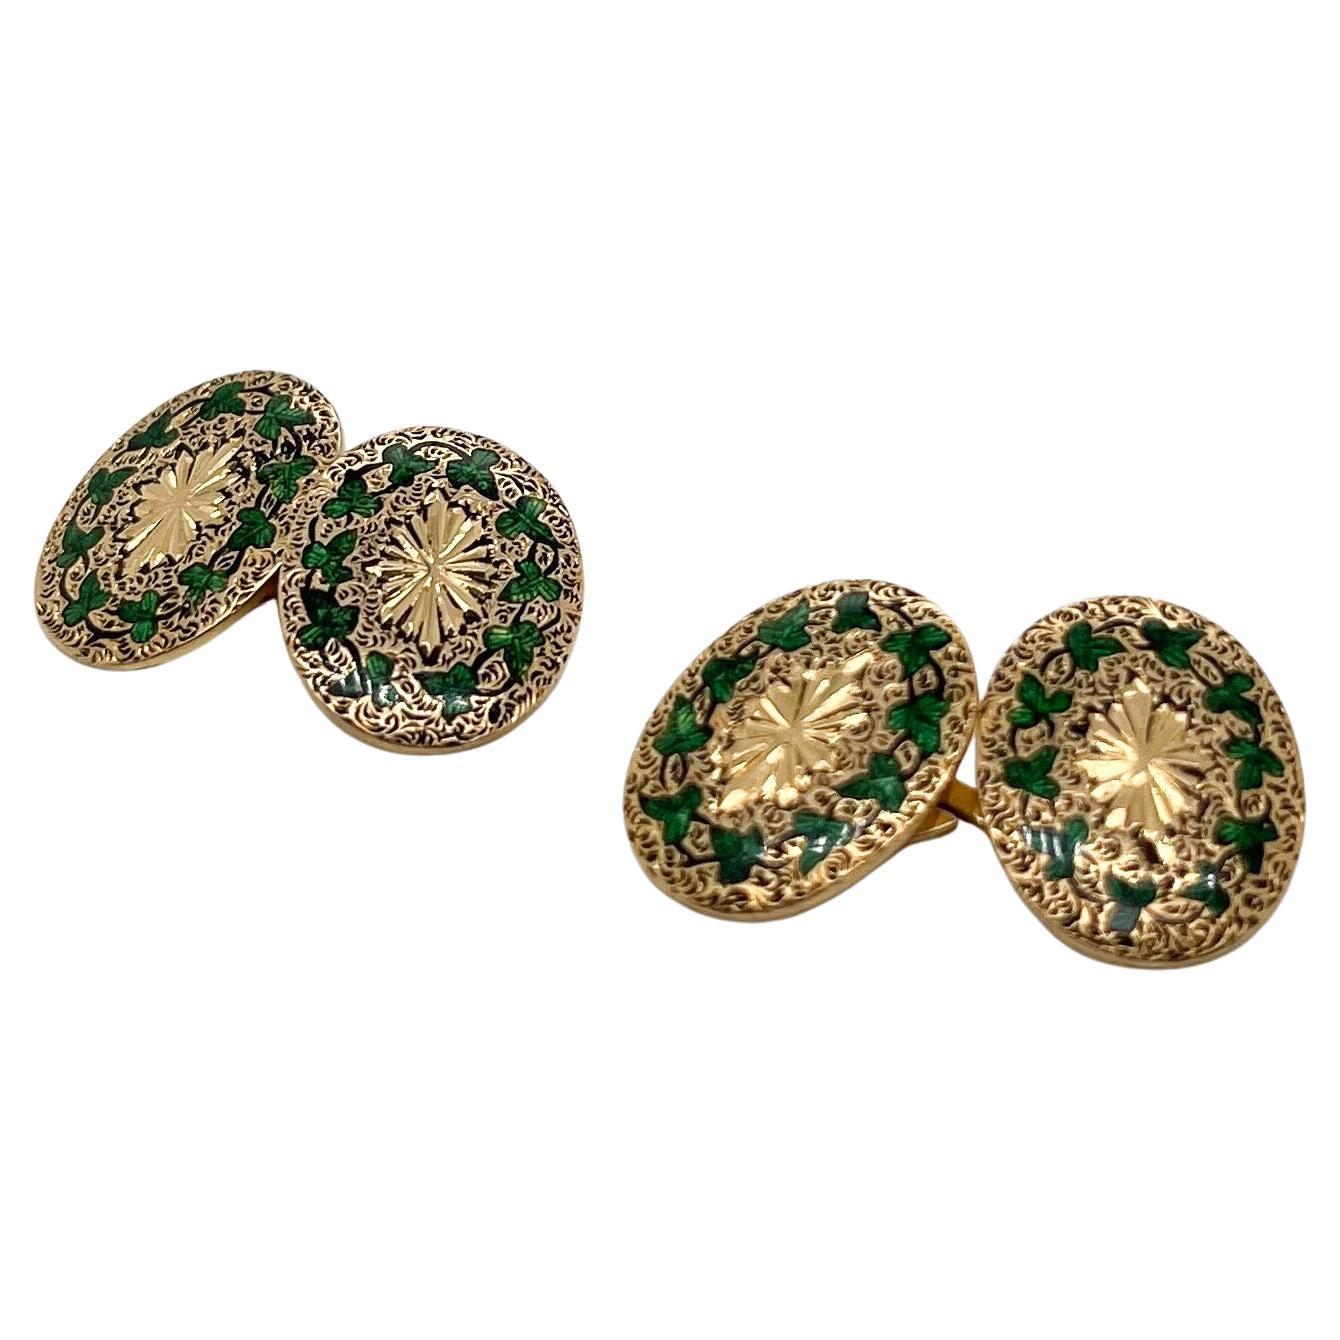 Antique Belle Époque Period French 18K Gold & Green Enamel Oval Cufflinks